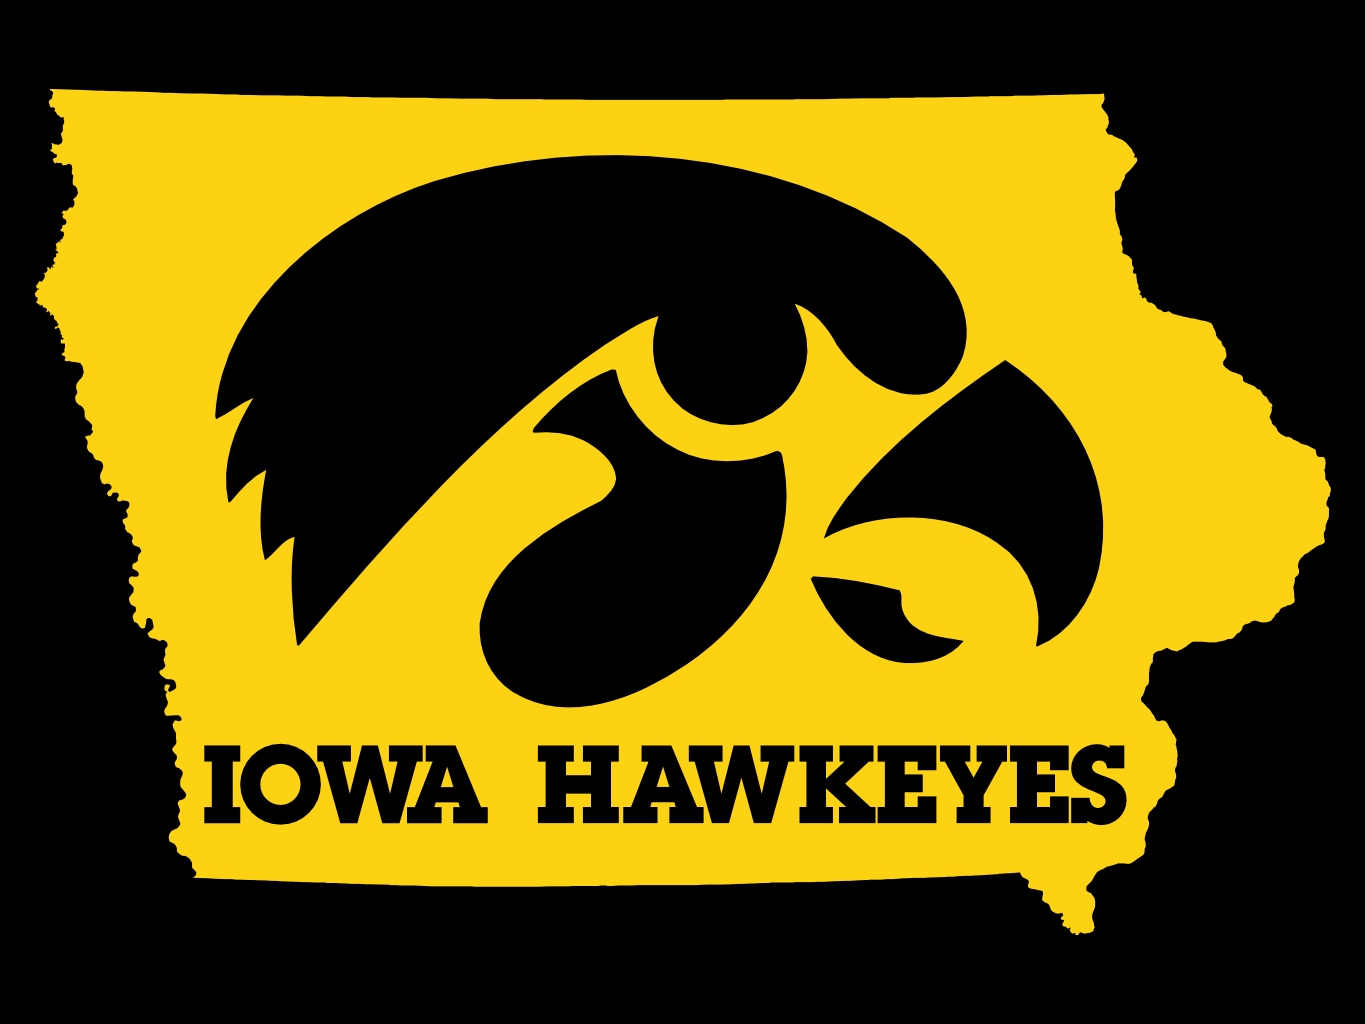 Iowa hawkeyes. 